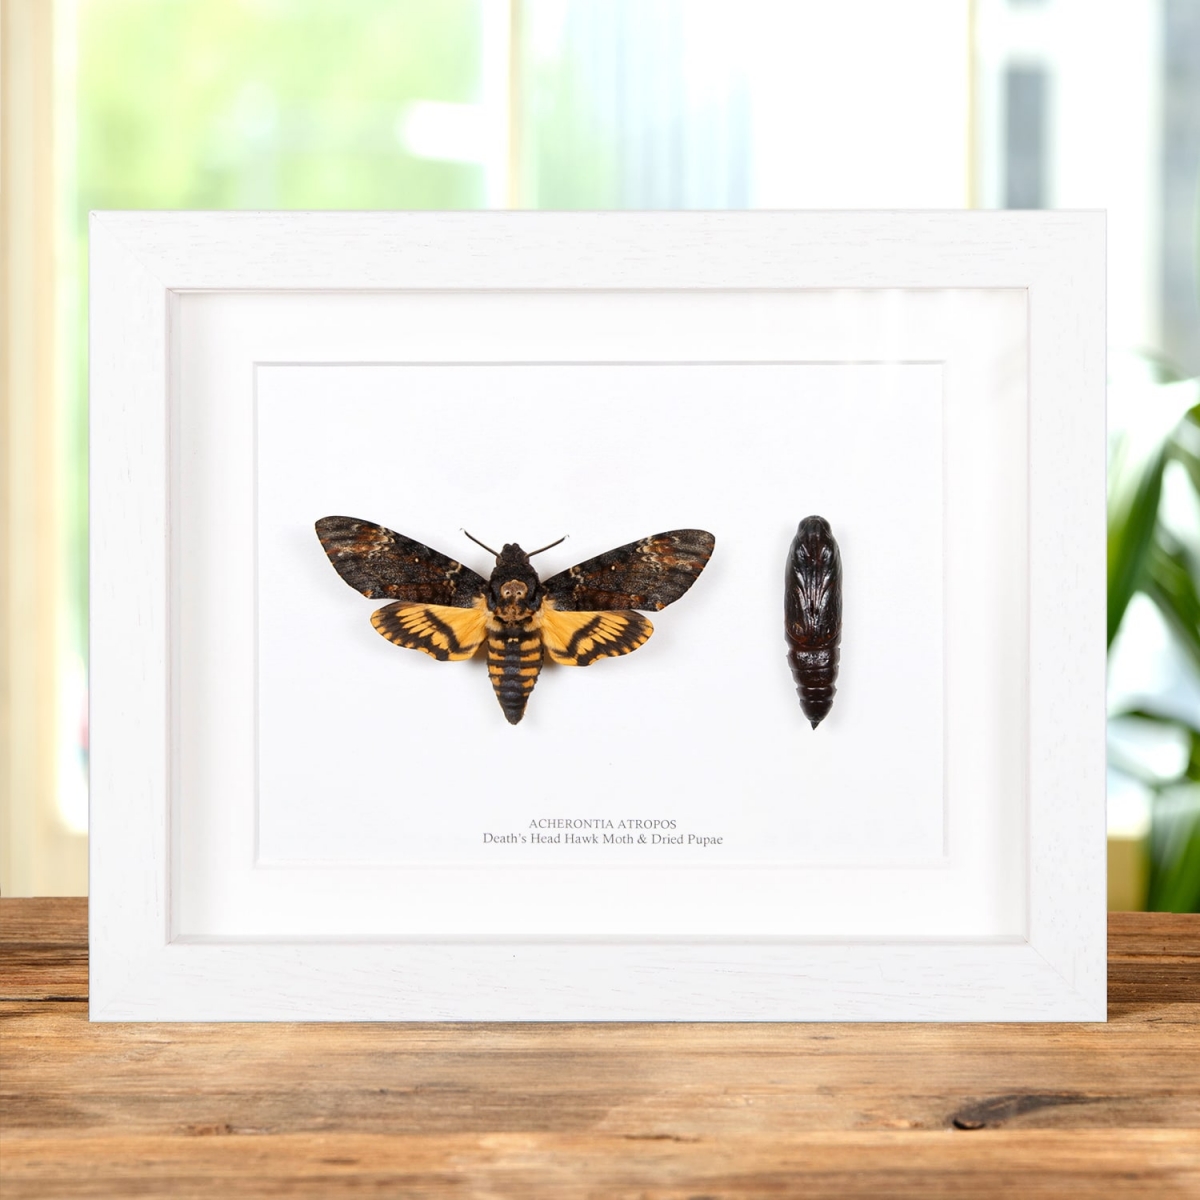 Pupae and Death's Head Hawk Moth in Box Frame (Acherontia atropos)